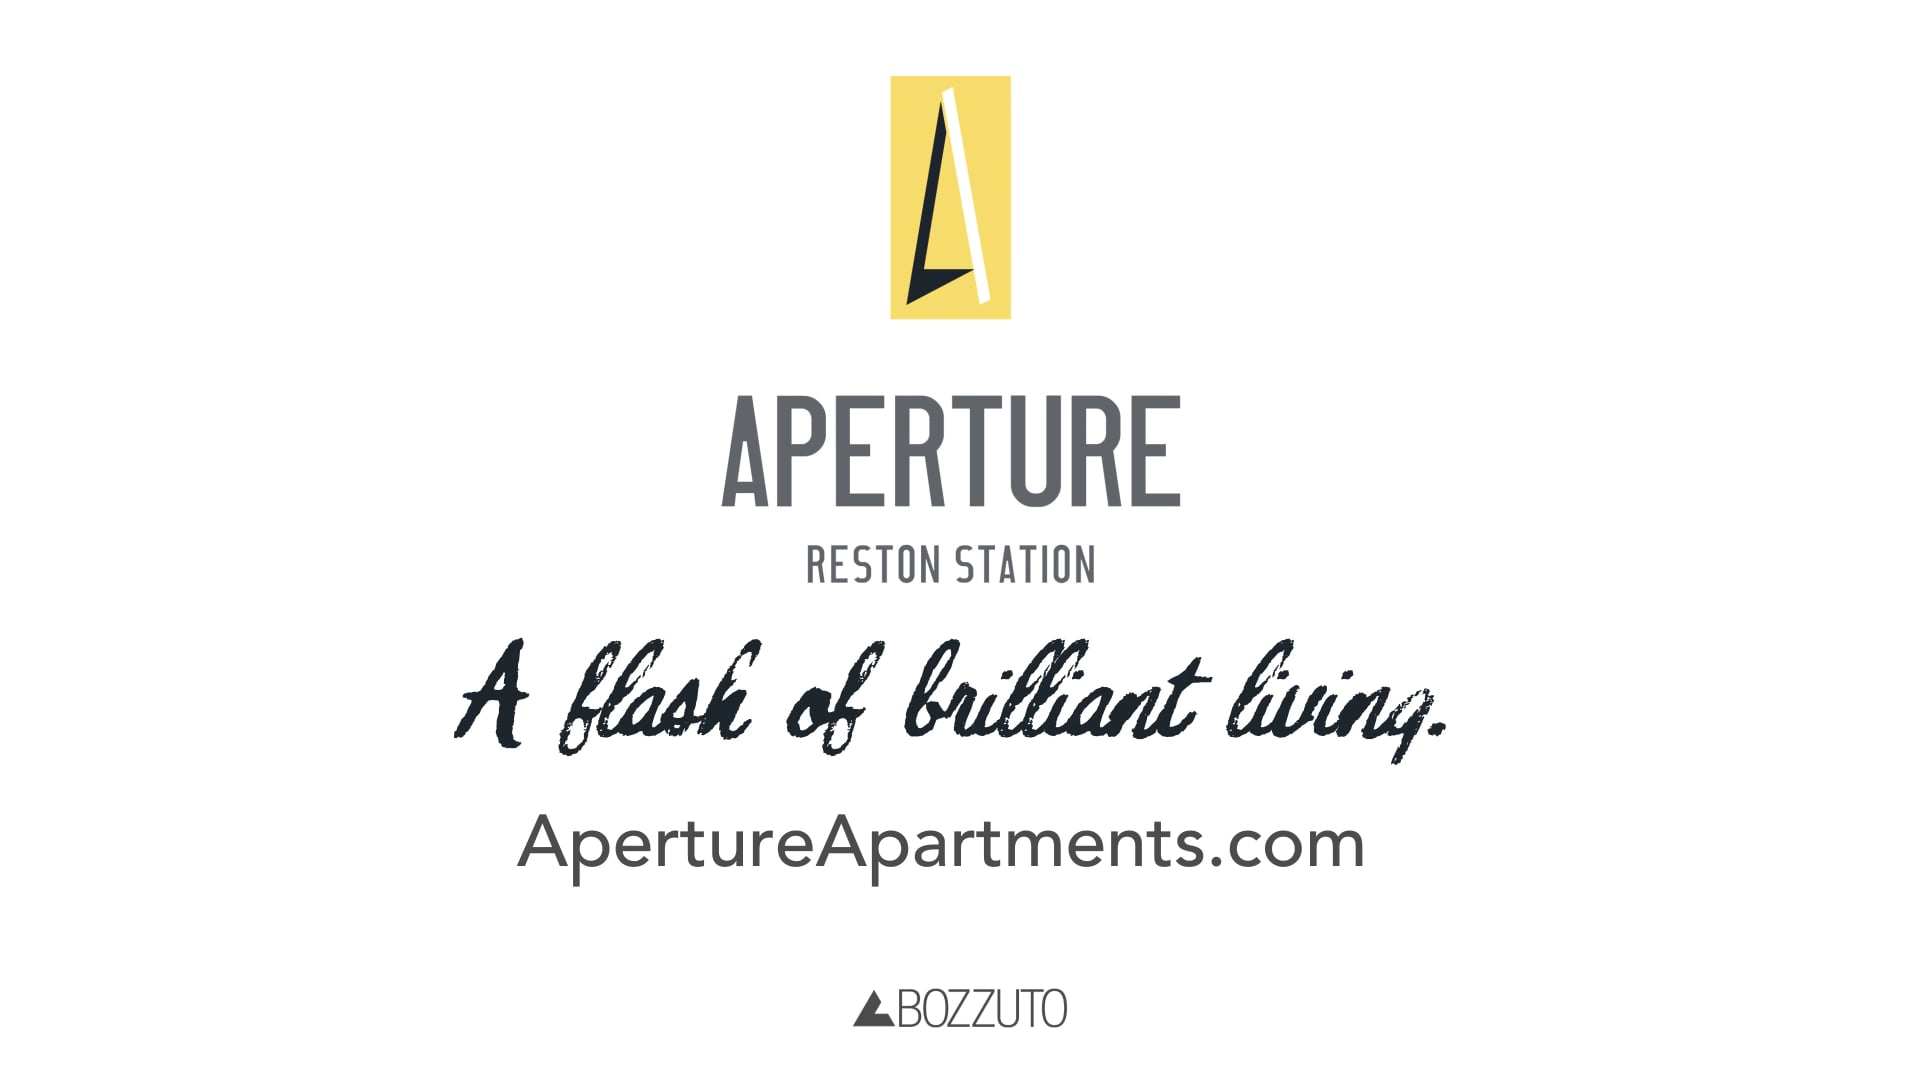 Aperture Apartments